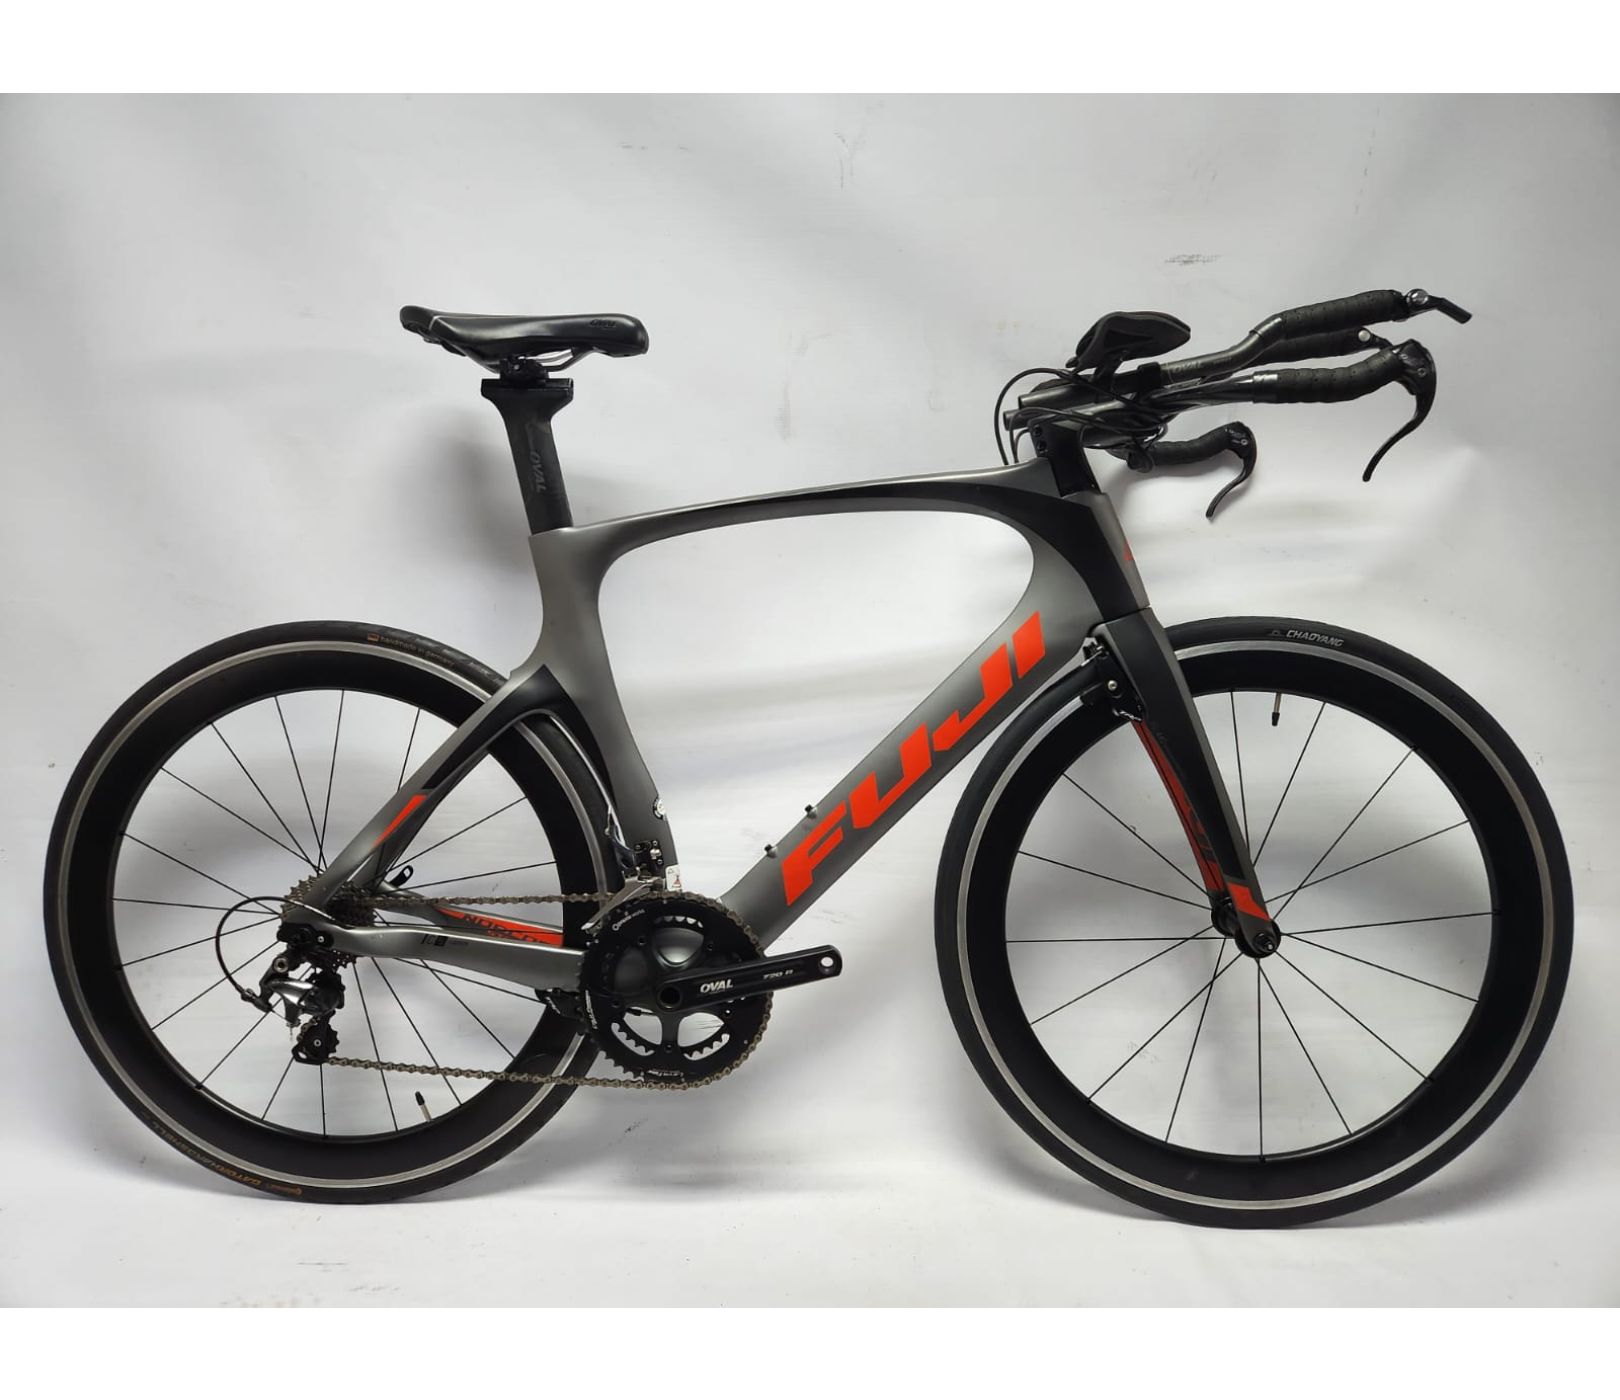 Pre-Owned Fuji Norcom 2.1 TT Carbon Road Bike - Medium/Large